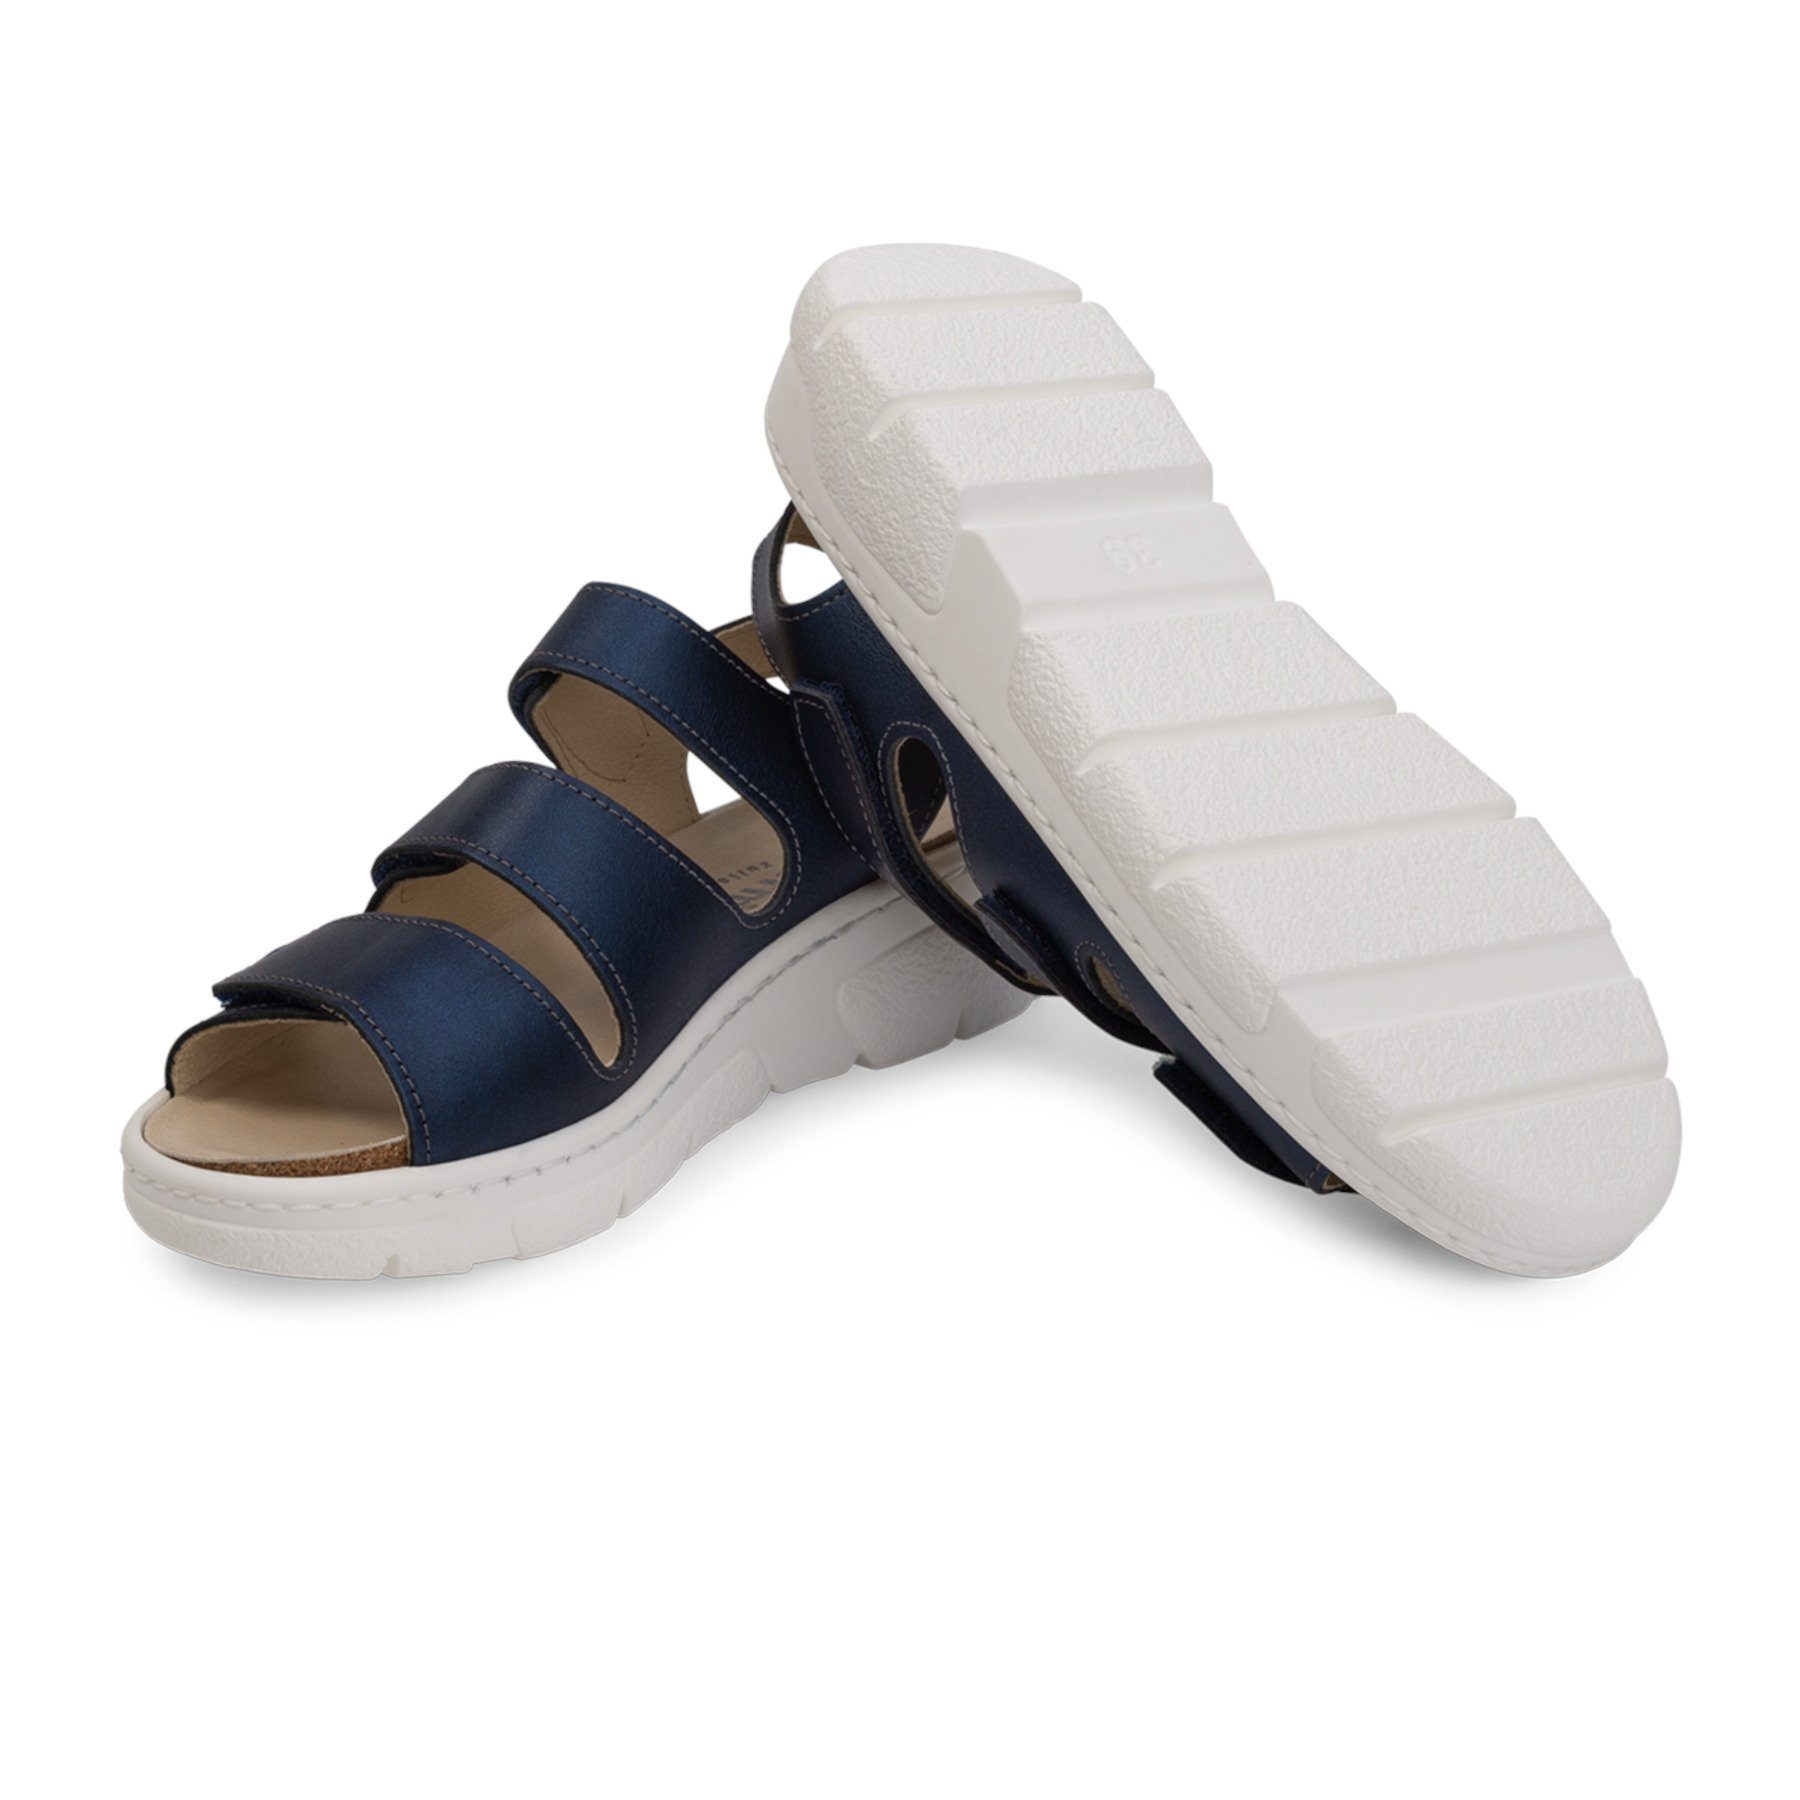 Sandale marine vitaform Nappaleder Damenschuhe Sandale